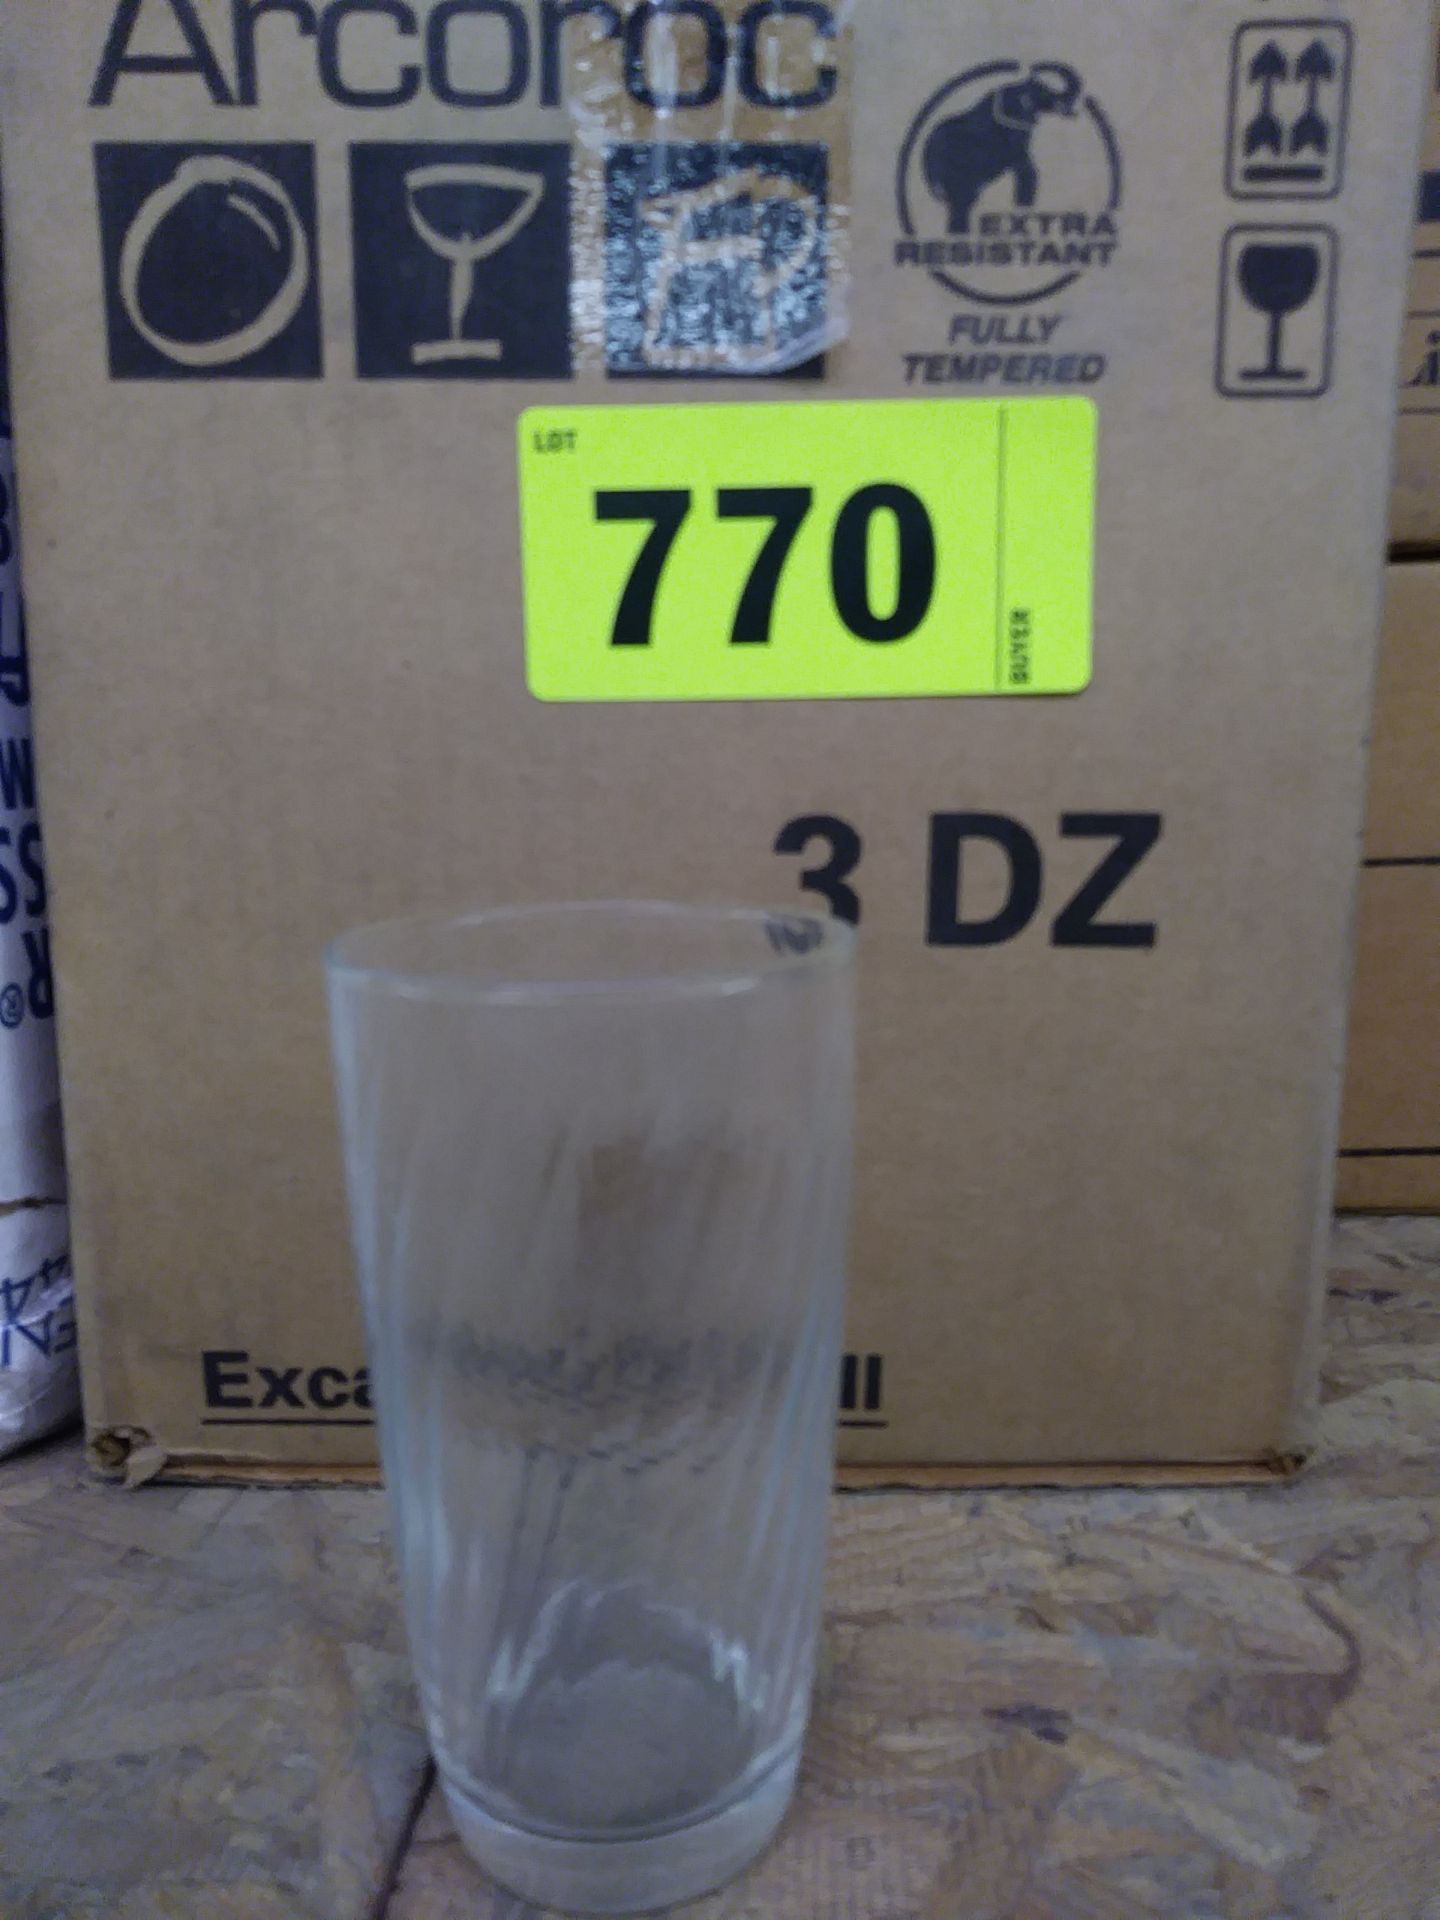 NEW ARCOROC 10OZ EXCALIBUR HI BALL DRINKING GLASS 5" TALL X 3" DIA (INCLUDES QTY: 180)